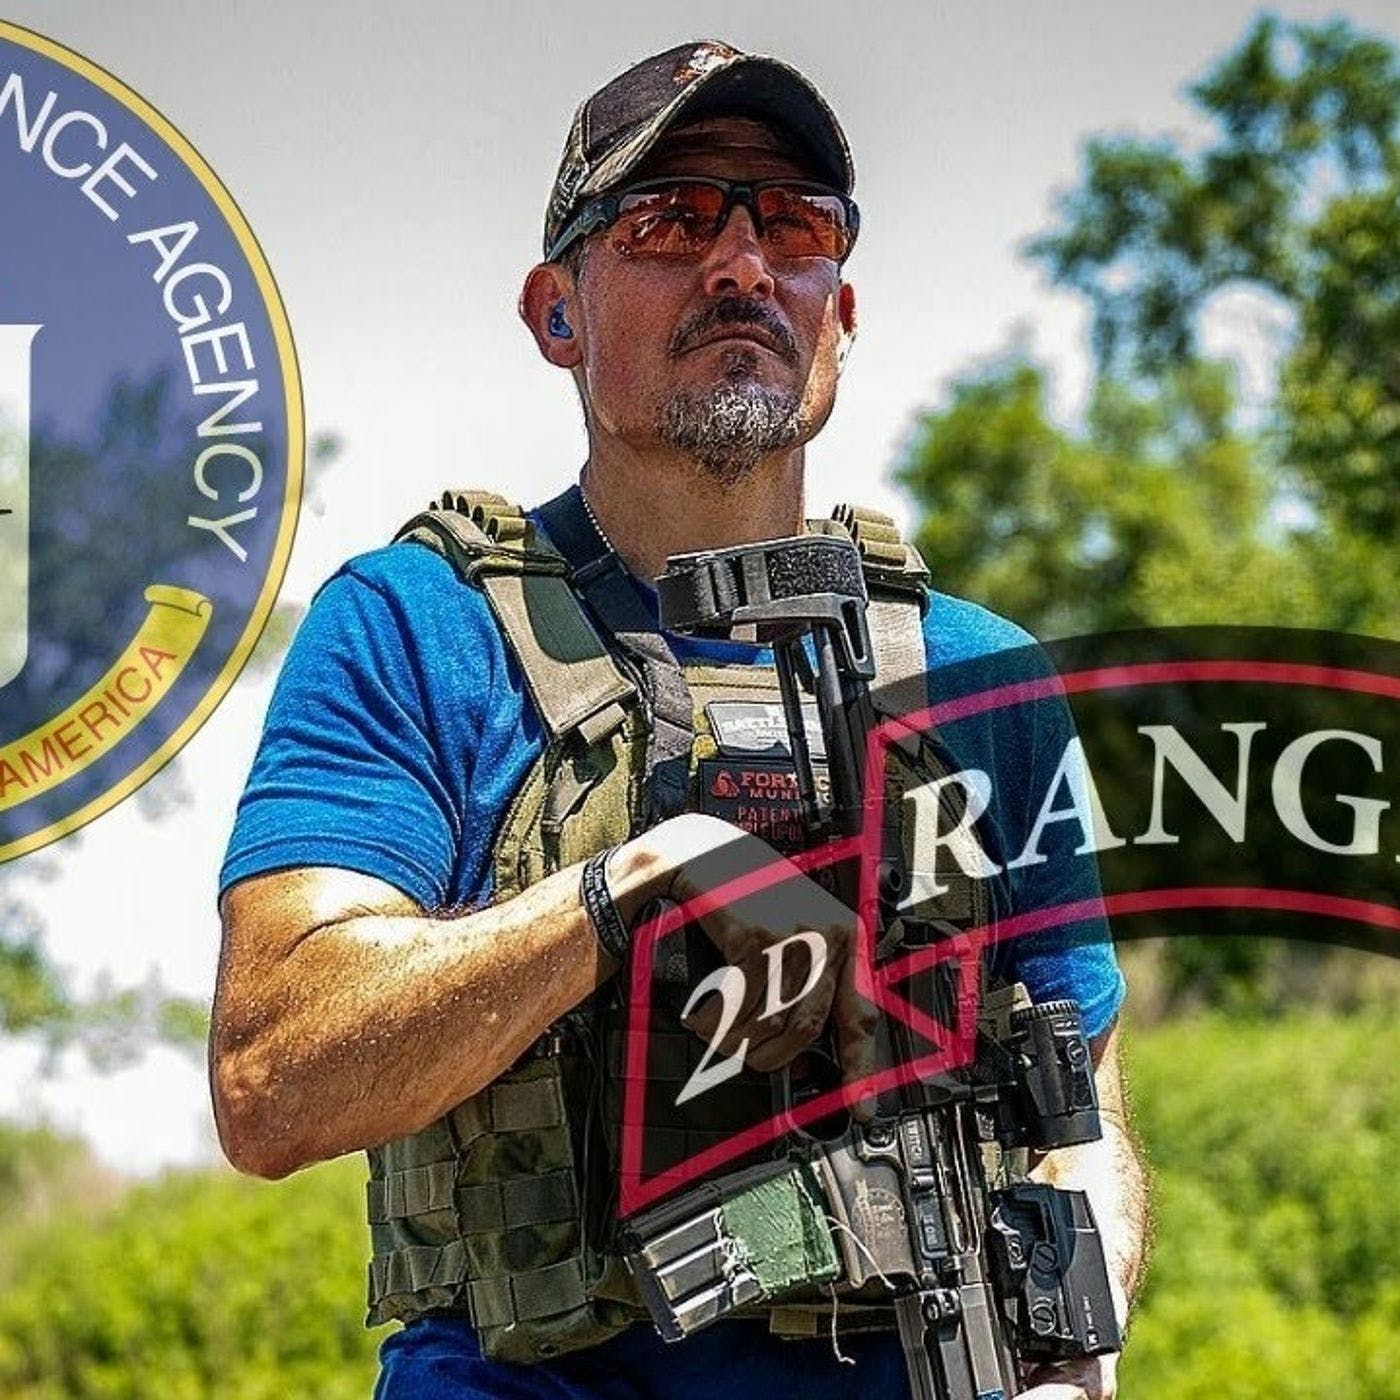 Kris Paronto, 2/75 Ranger, OGA contractor, Benghazi survivor, Ep. 101